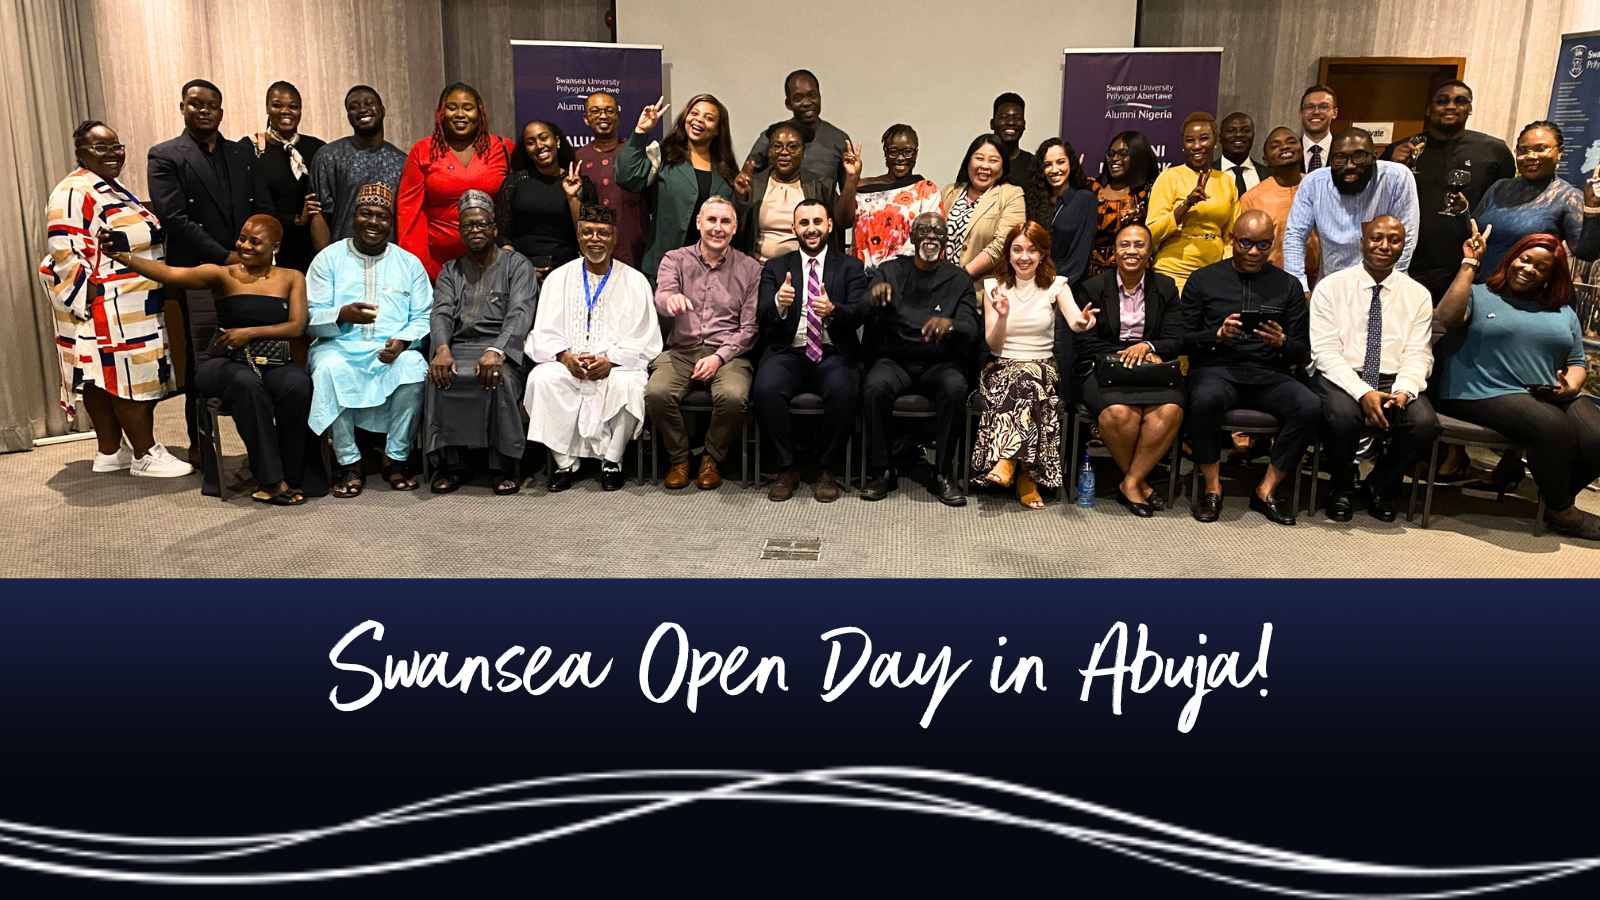 Swansea Open Day in Day in Abuja